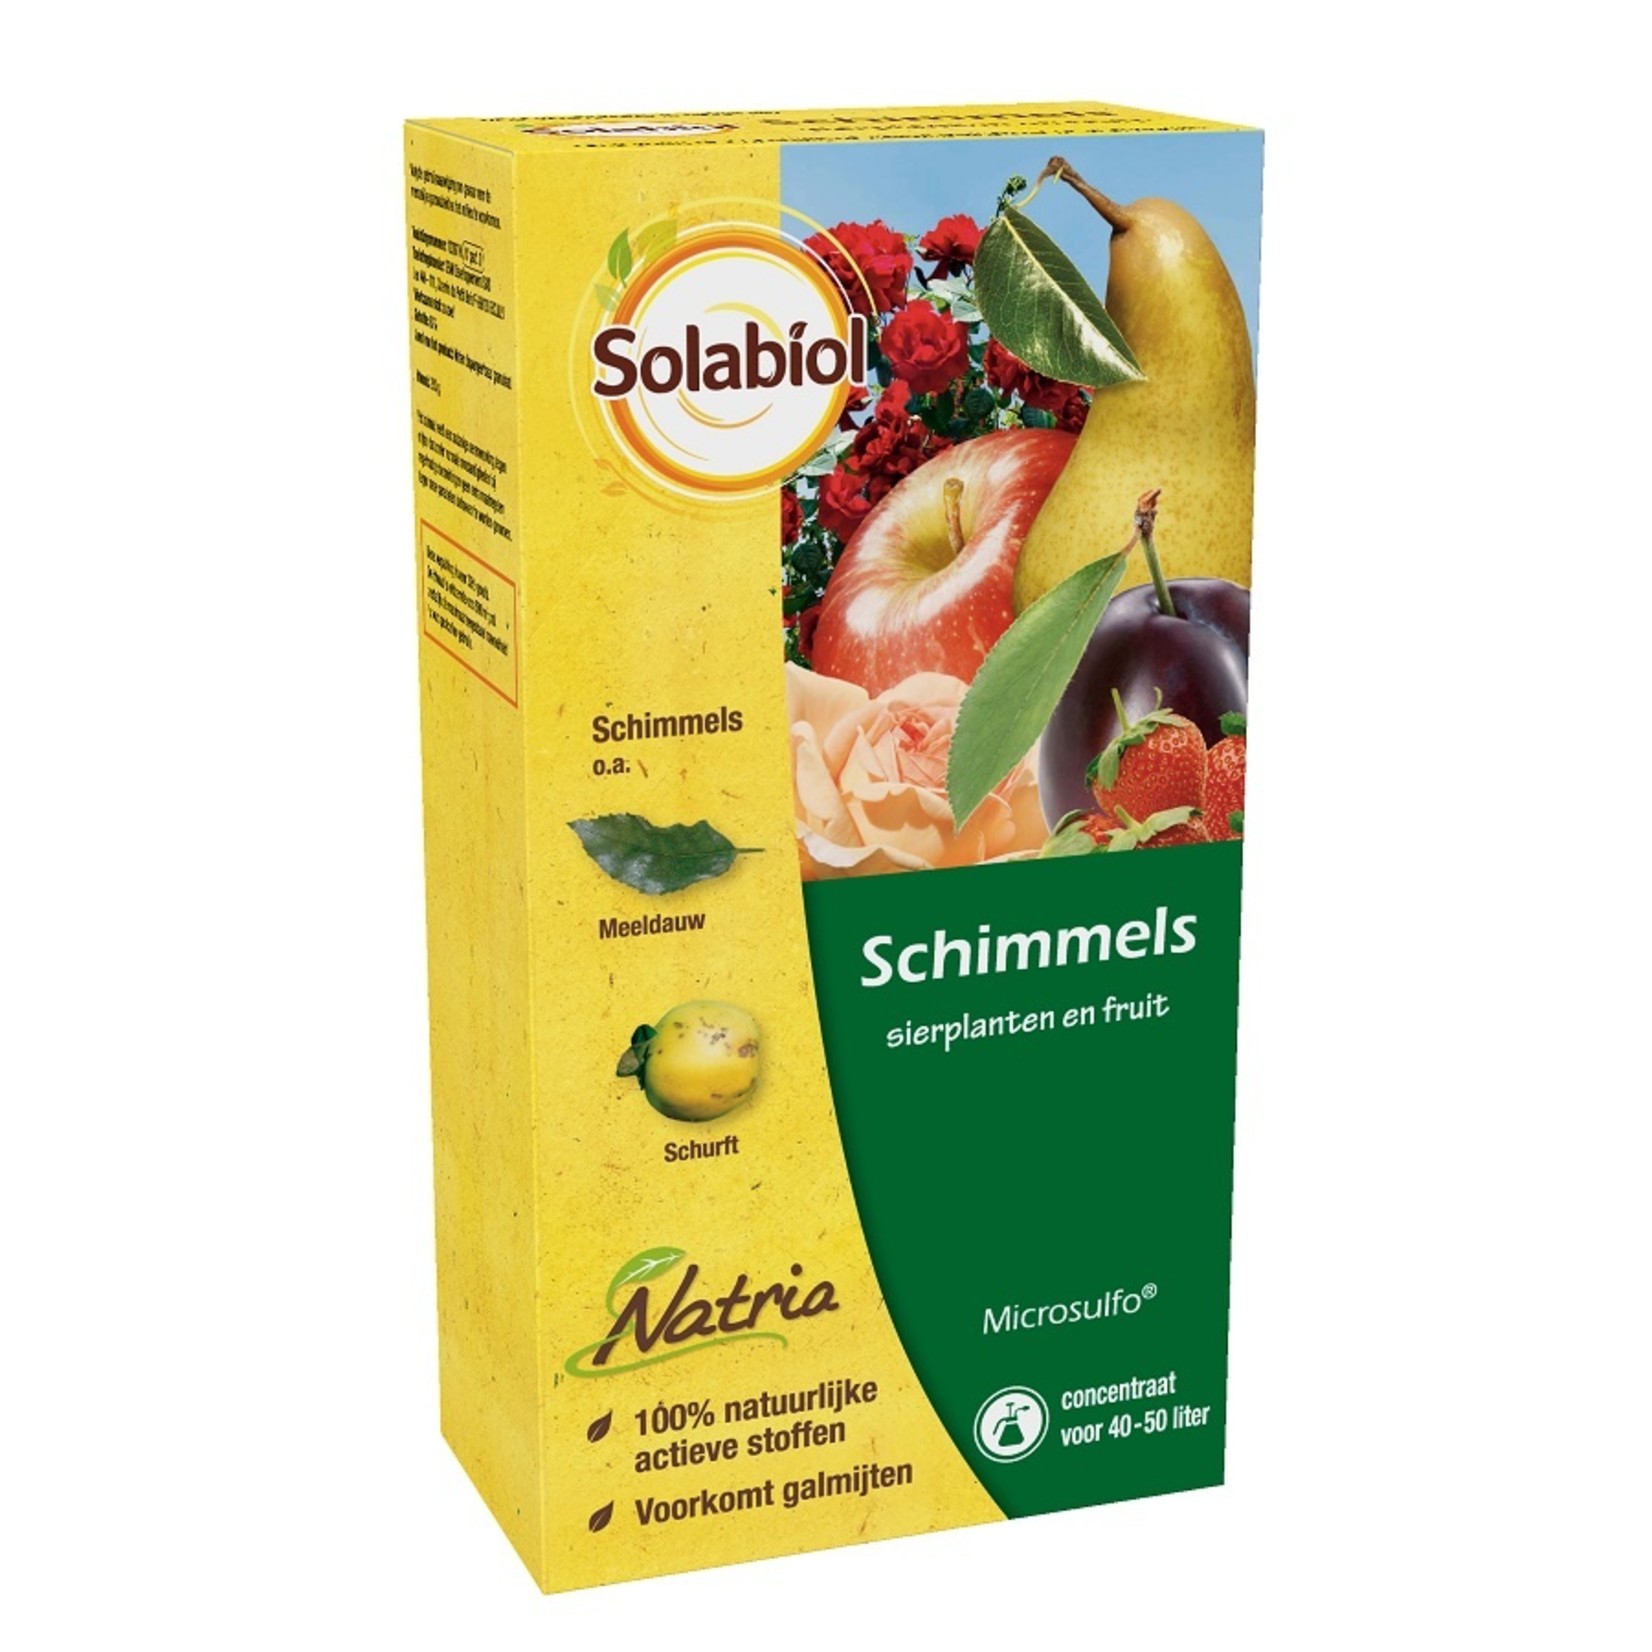 Solabiol Natria Microsulfo spuitzwavel 200 gram tegen schimmels